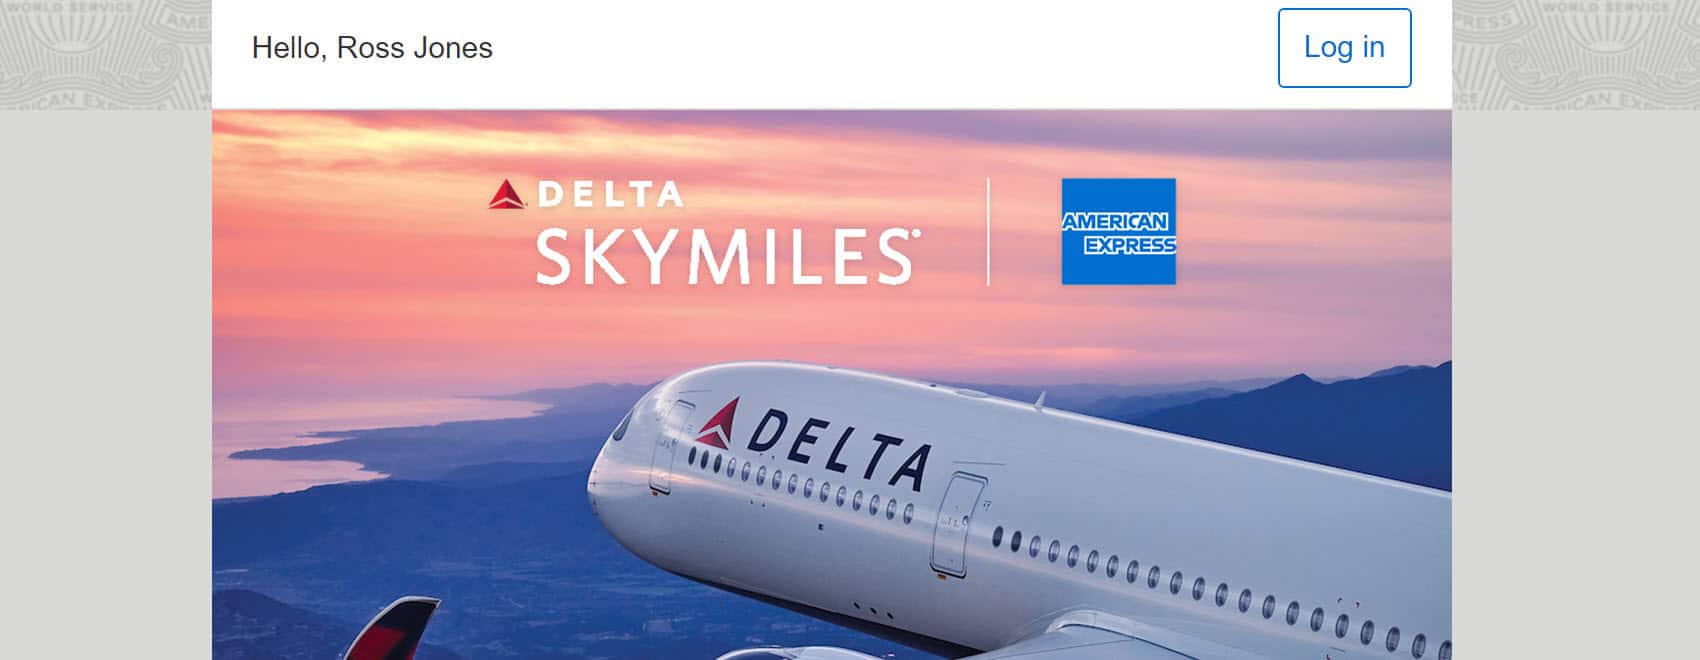 Delta SkyMiles Status Match We Get To Travel!